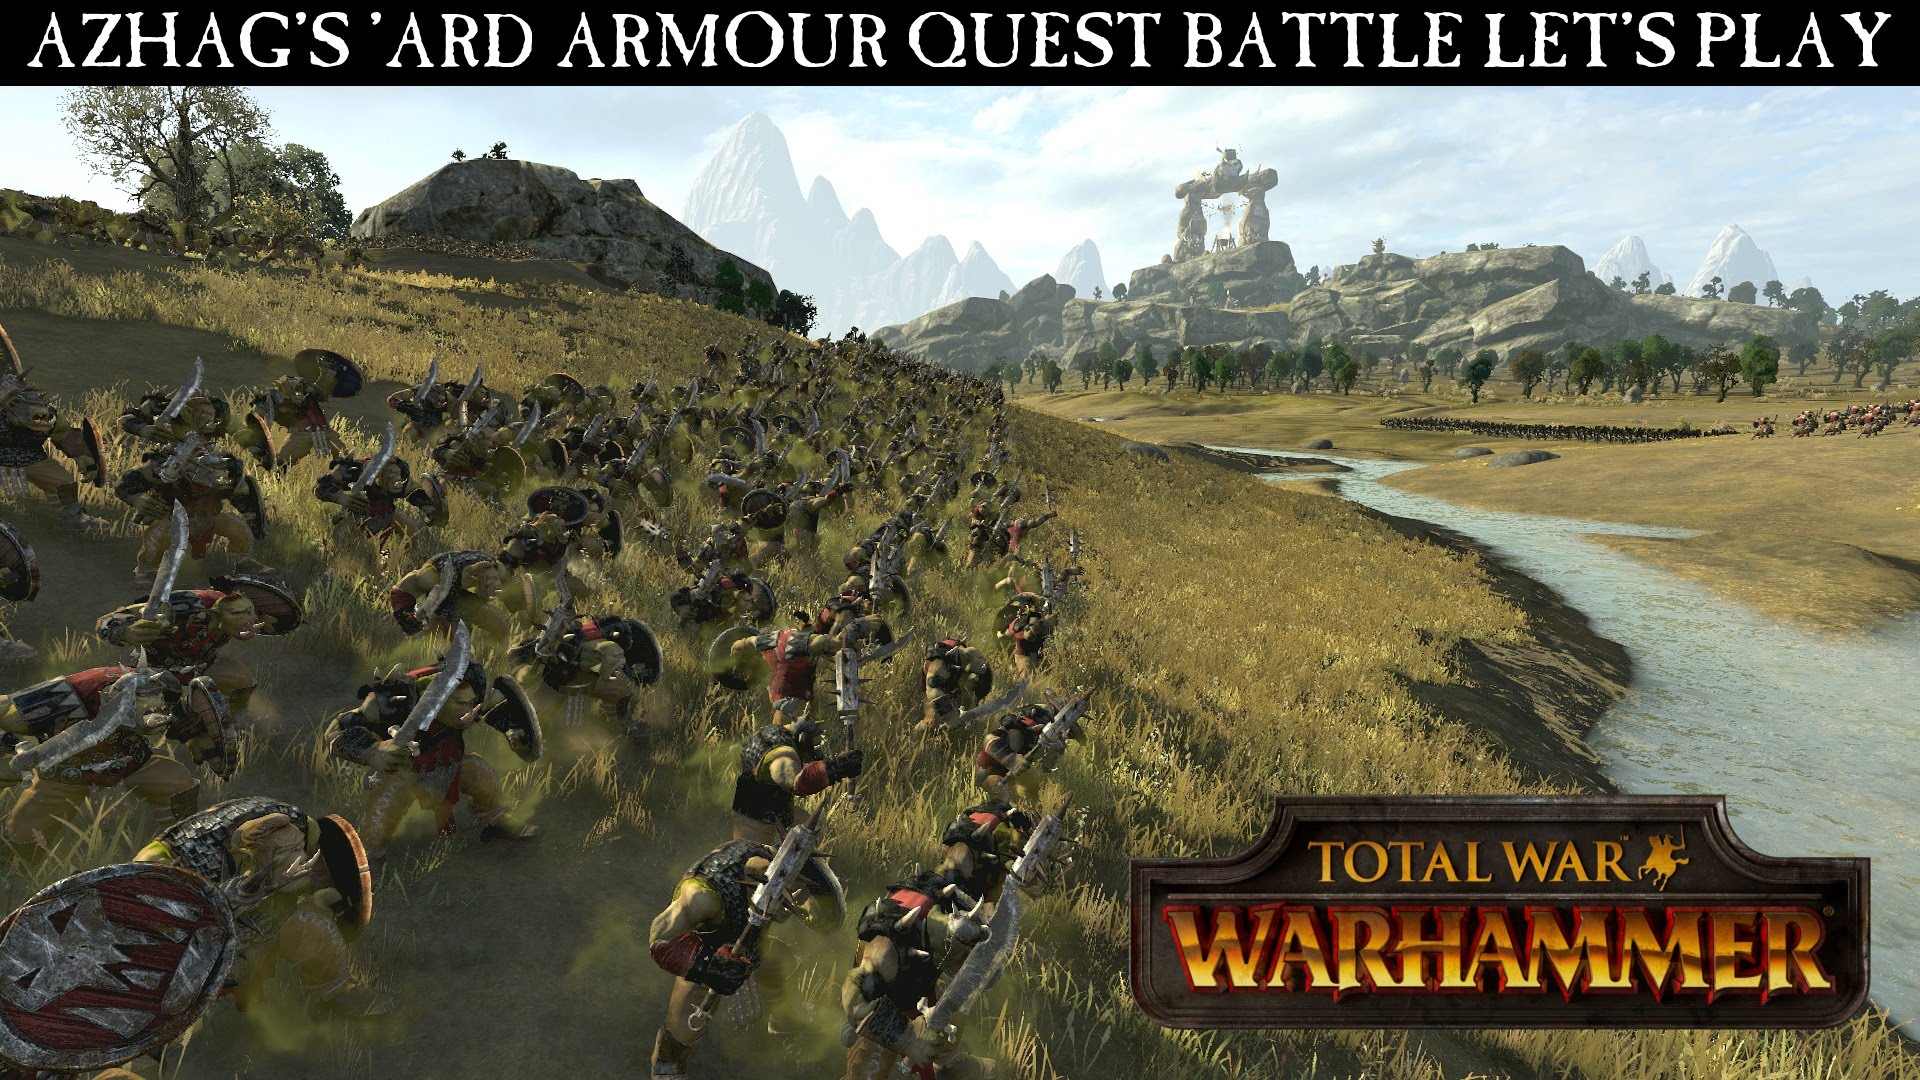 Total War: WARHAMMER Gameplay Video - Azhag's Quest Battle Let's Play